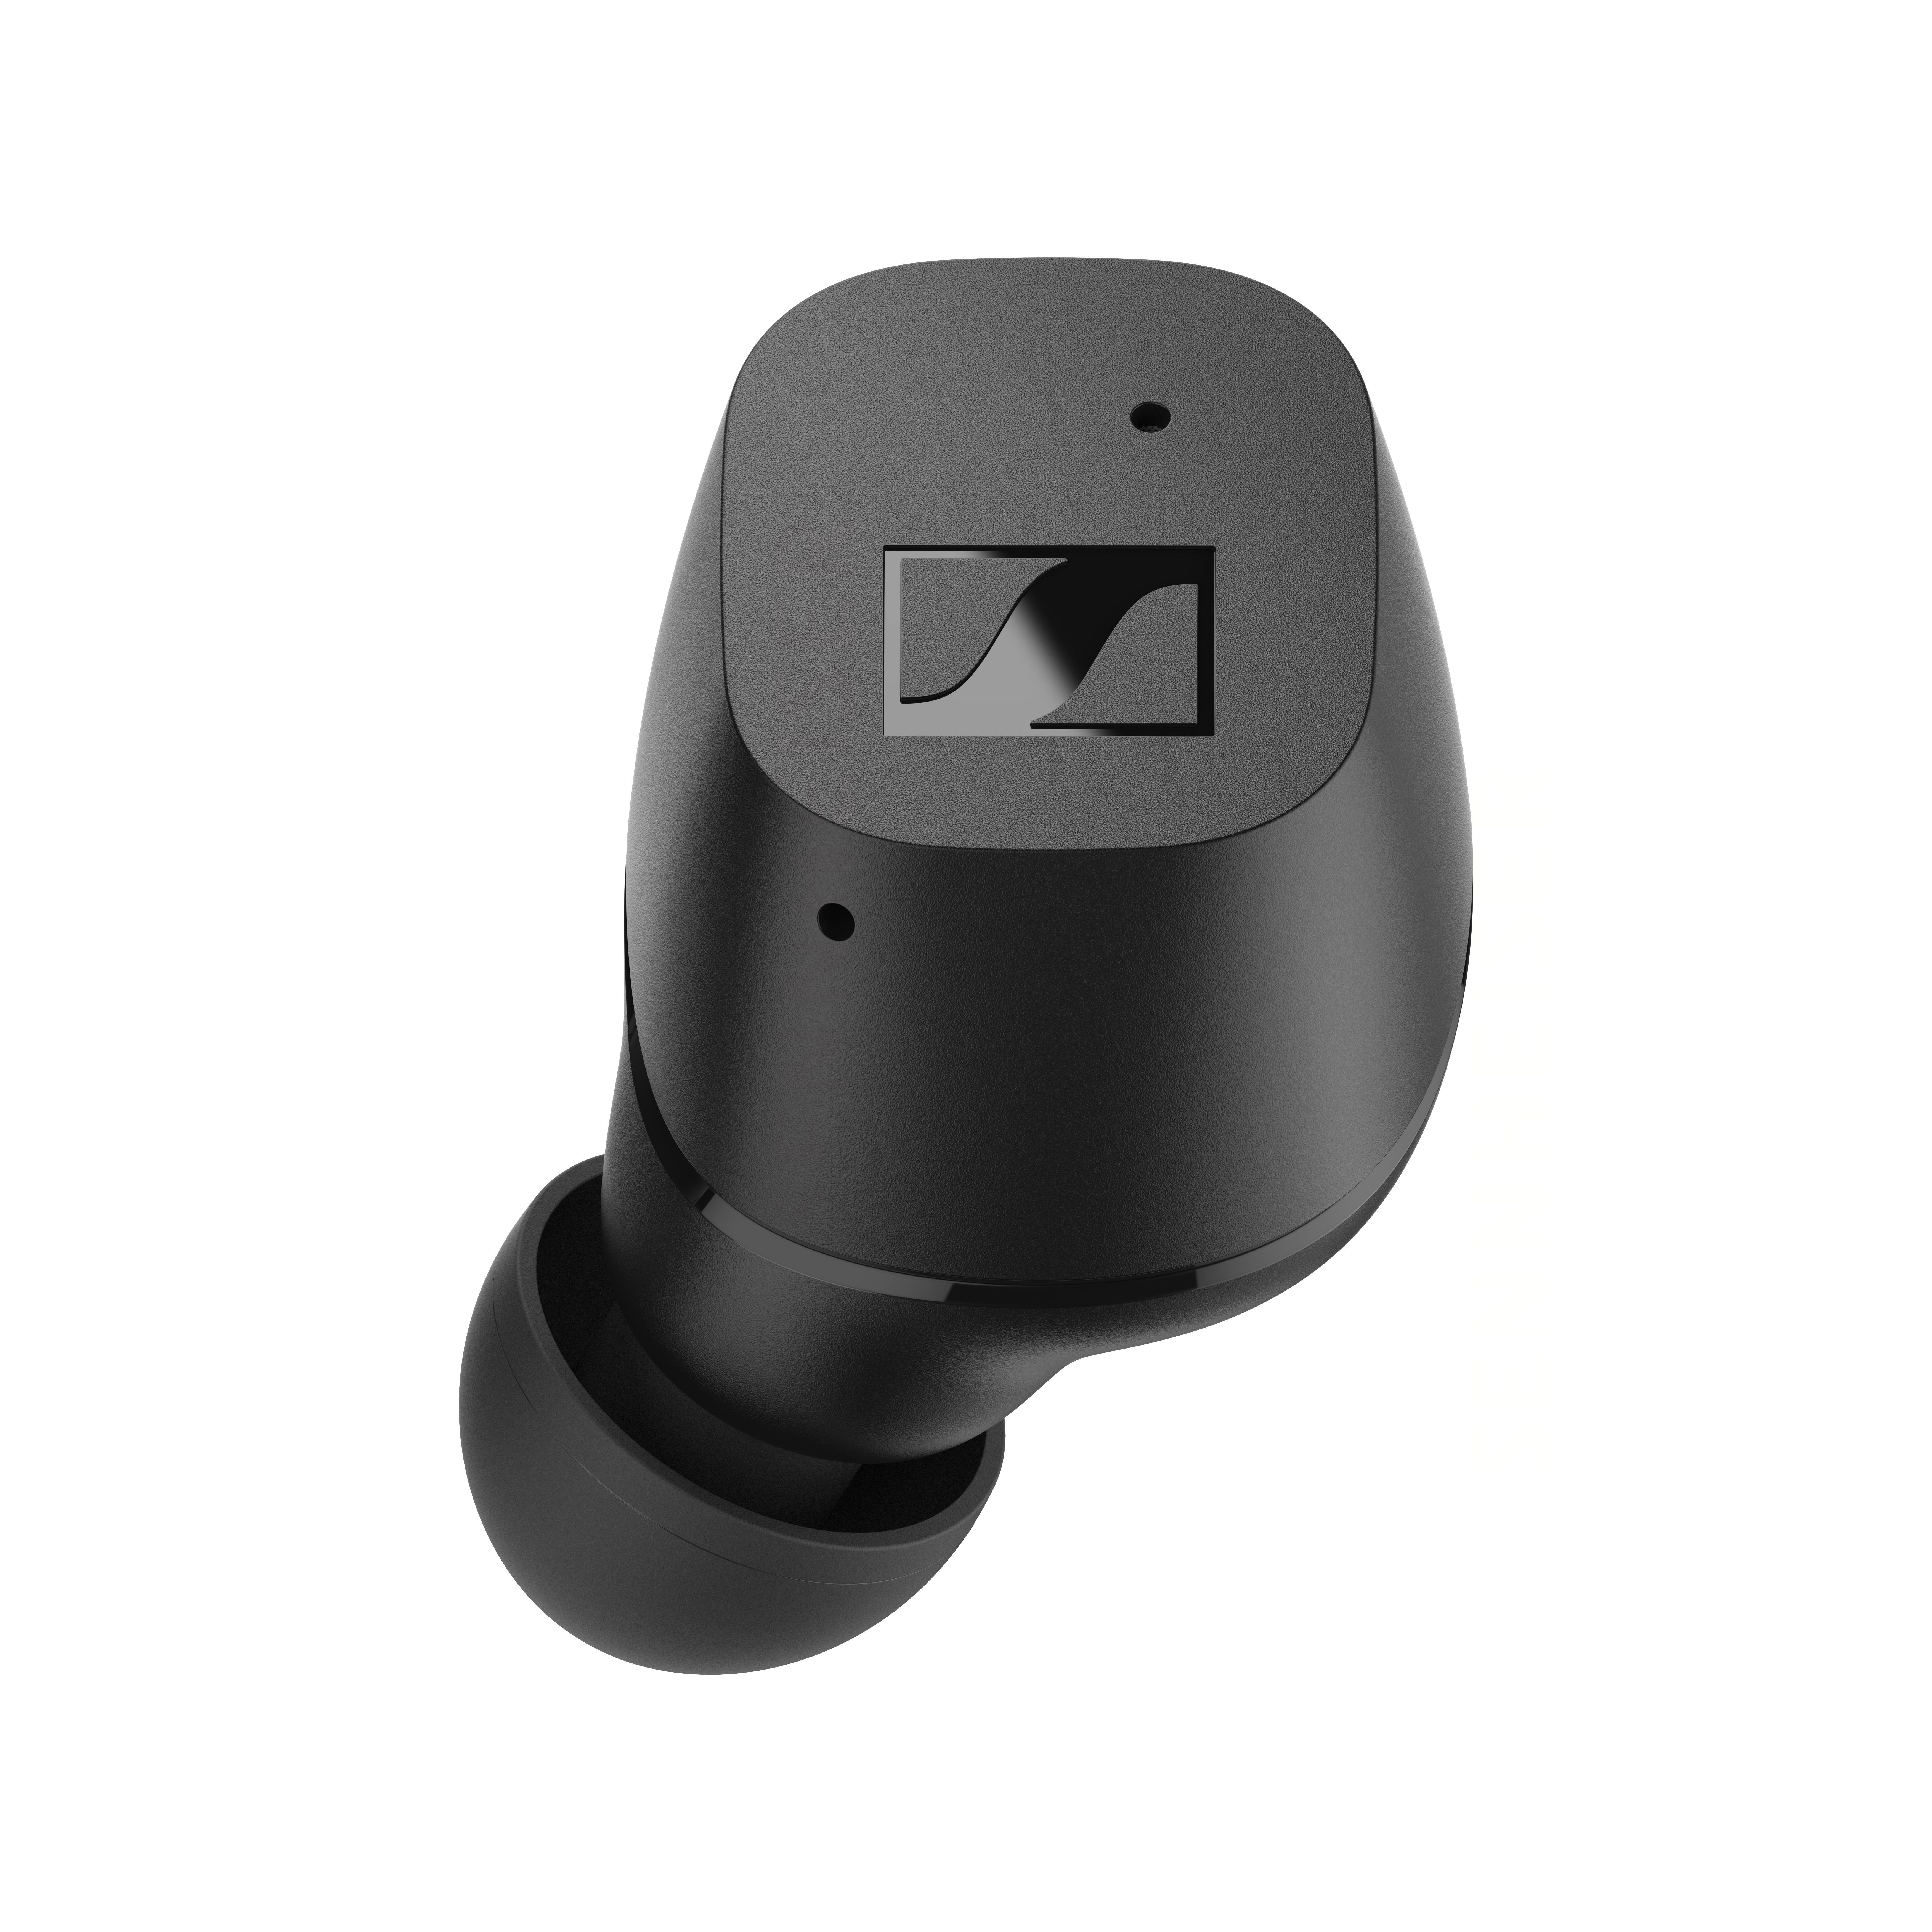 In-ear CX SENNHEISER Bluetooth Black TW1, Kopfhörer True CX 200 Wireless